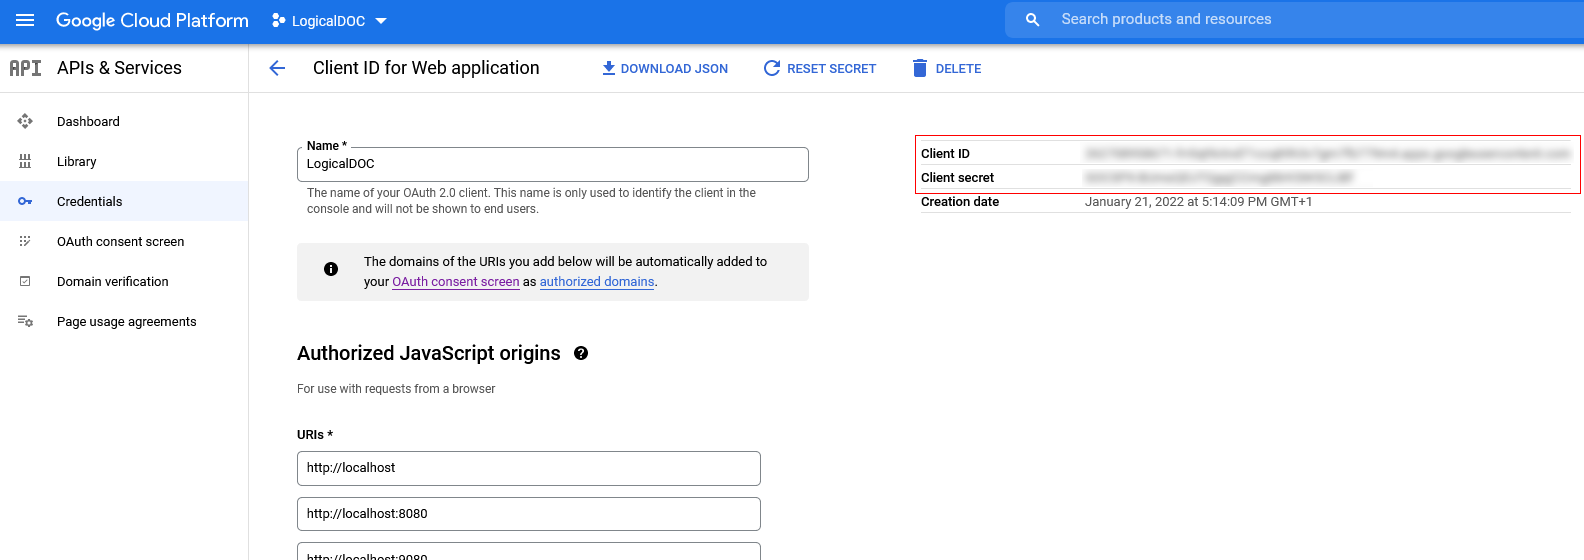 Google Drive API client id